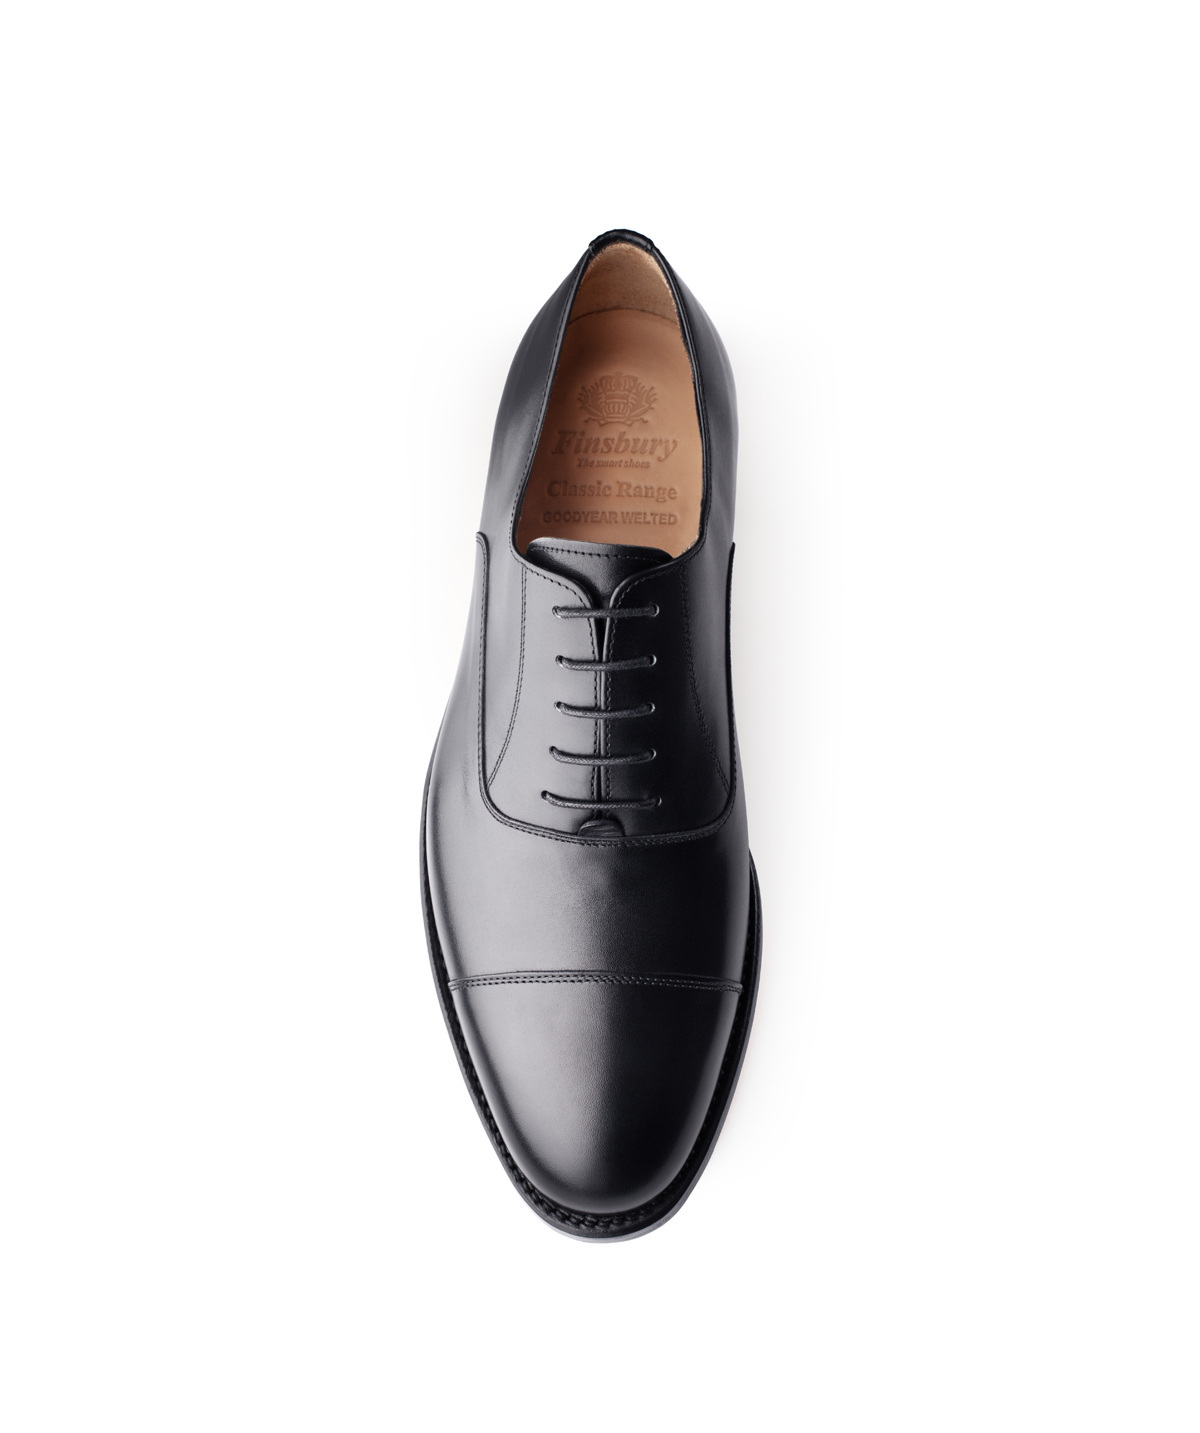 Chaussures Chaussures de travail Chaussures Oxford cherry boutique Chaussure Oxford noir style d\u00e9contract\u00e9 